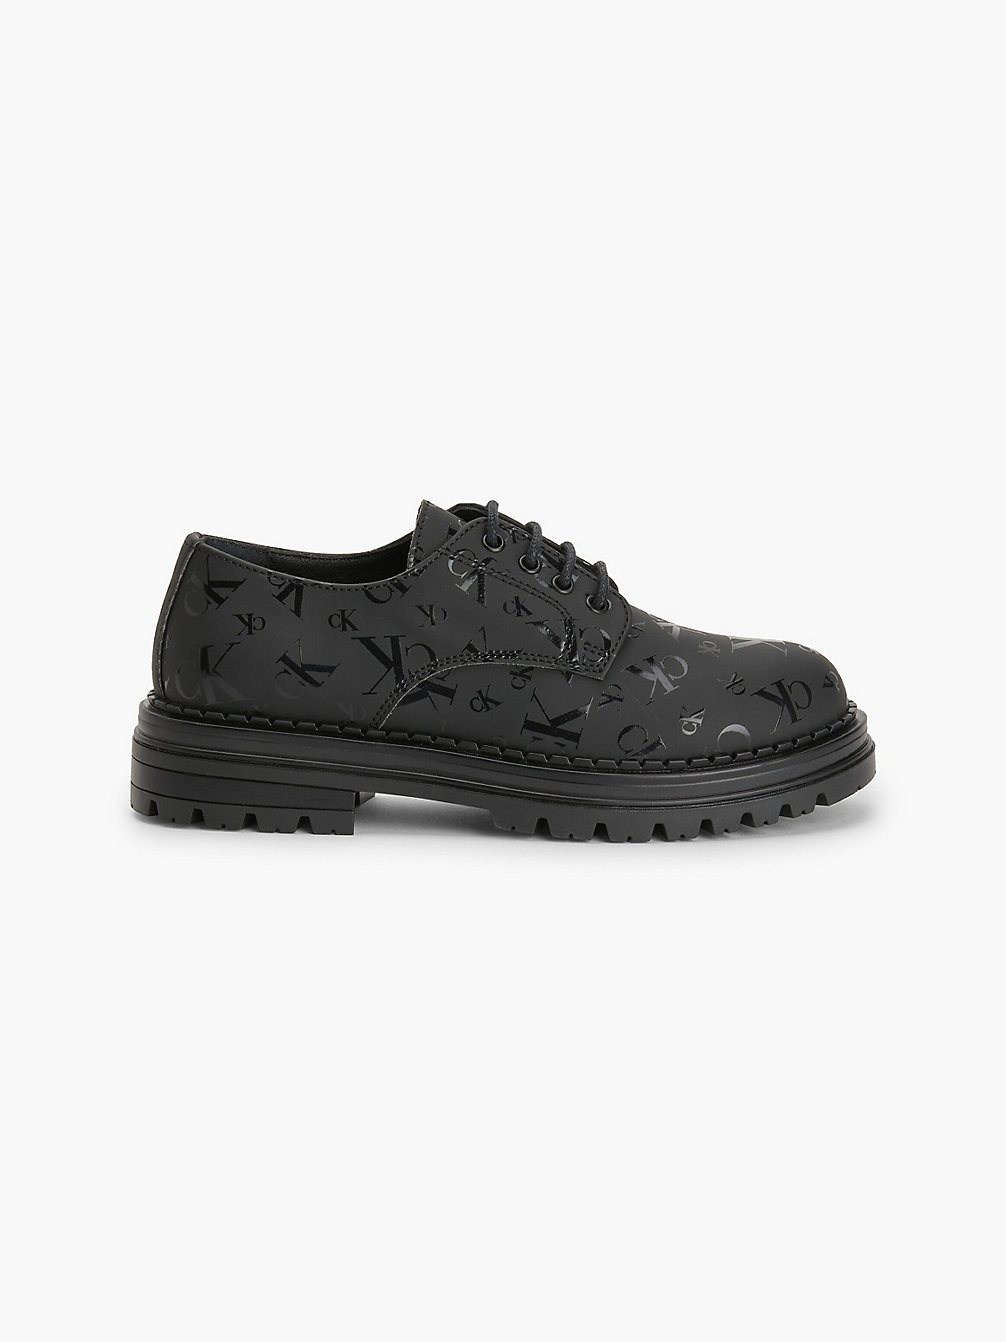 BLACK > Детские туфли со шнуровкой и логотипом > undefined kids unisex - Calvin Klein